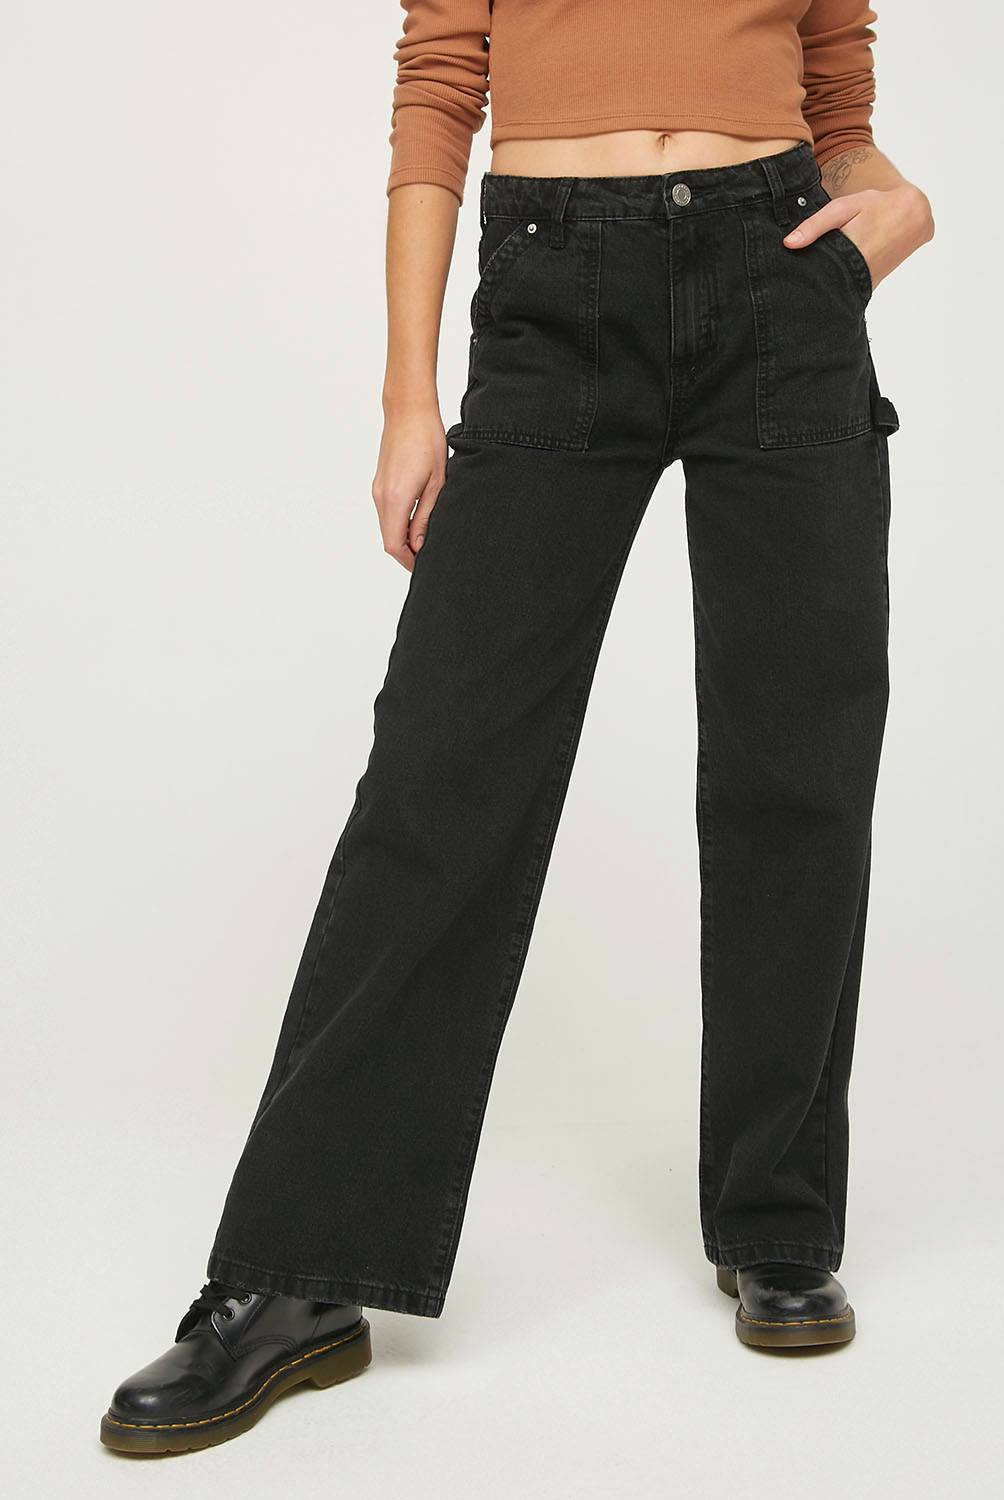 AMERICANINO - Americanino Jeans Cargo Tiro Alto Algodón Mujer